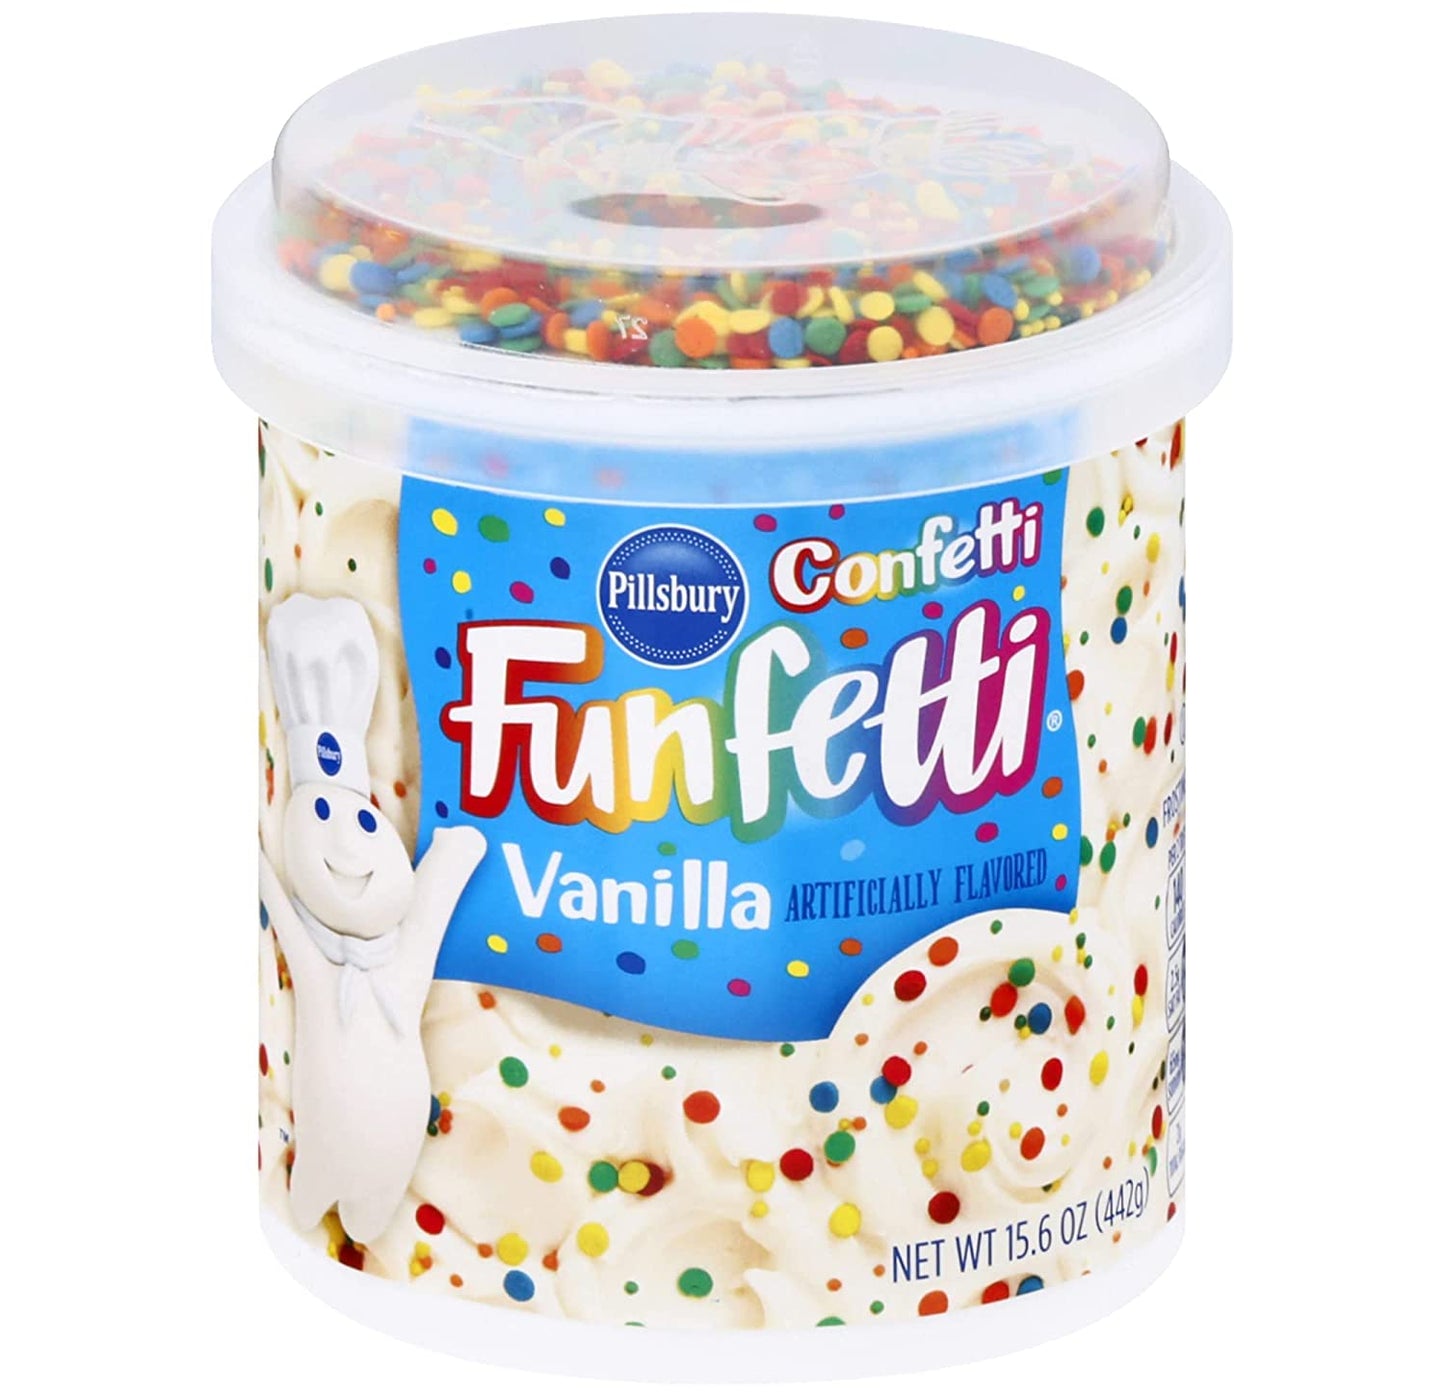 Pillsbury Funfetti Vanilla Frosting - Confetti 15.6oz